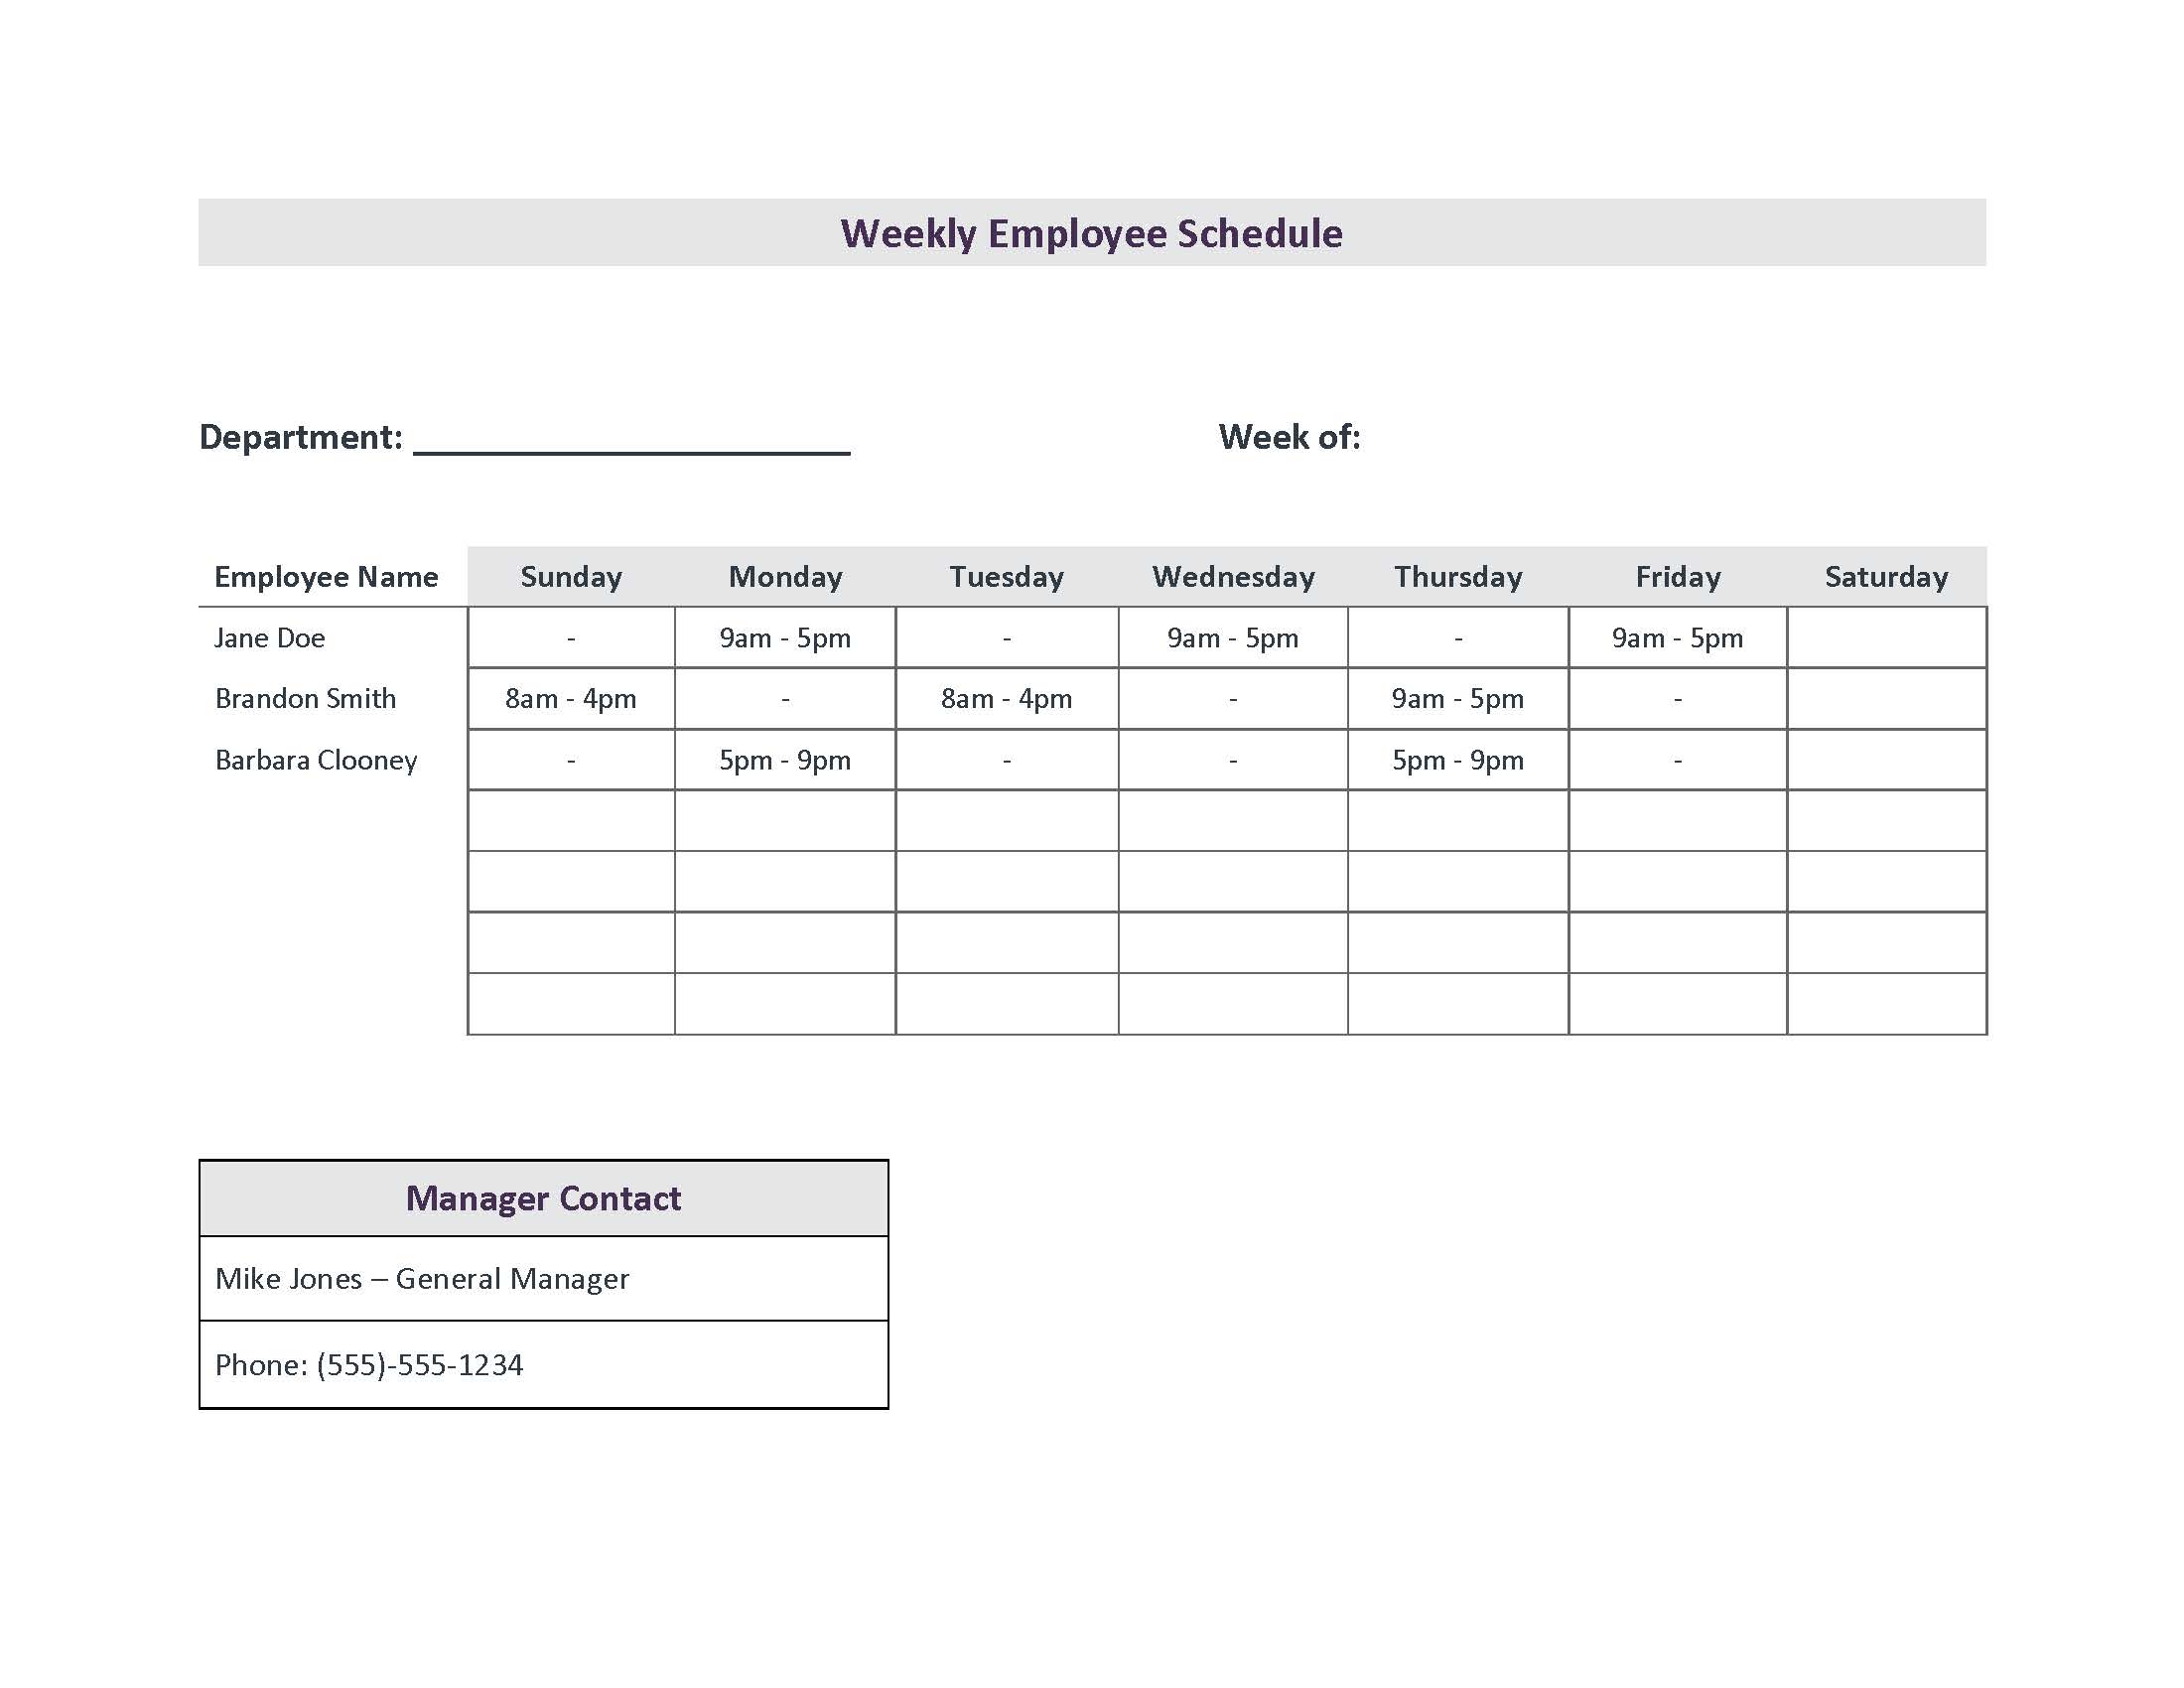 Create a Work Schedule in Word